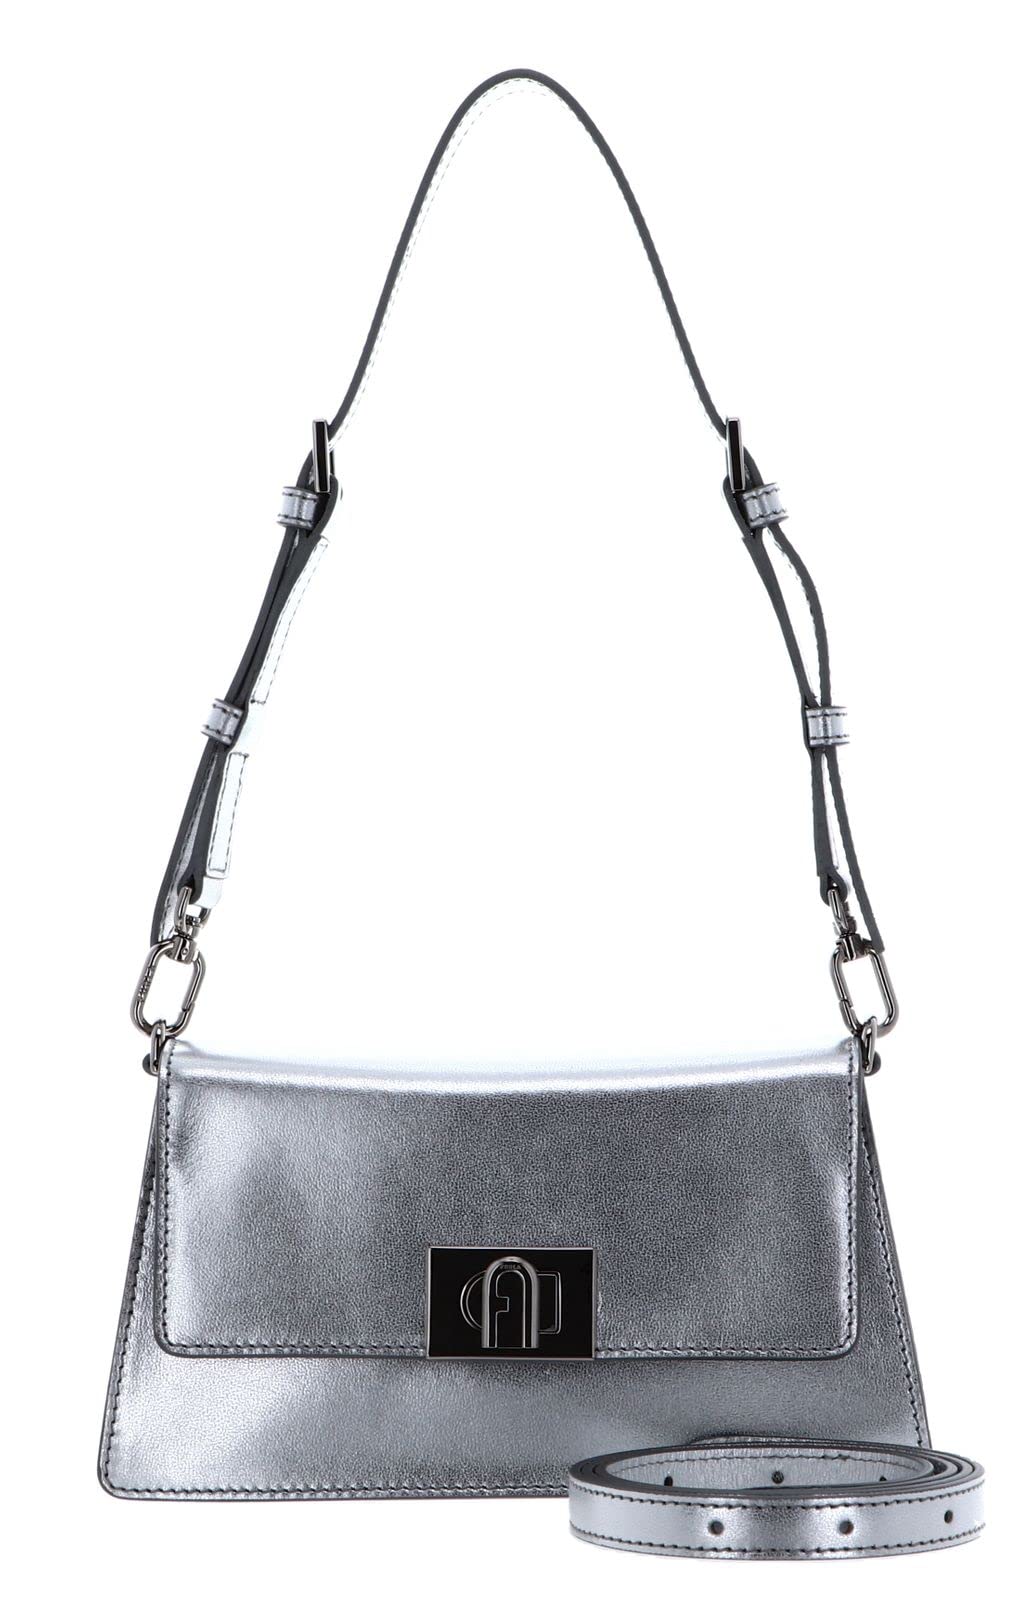 Furla Women's Zoe Silver Leather Shoulder Handbag